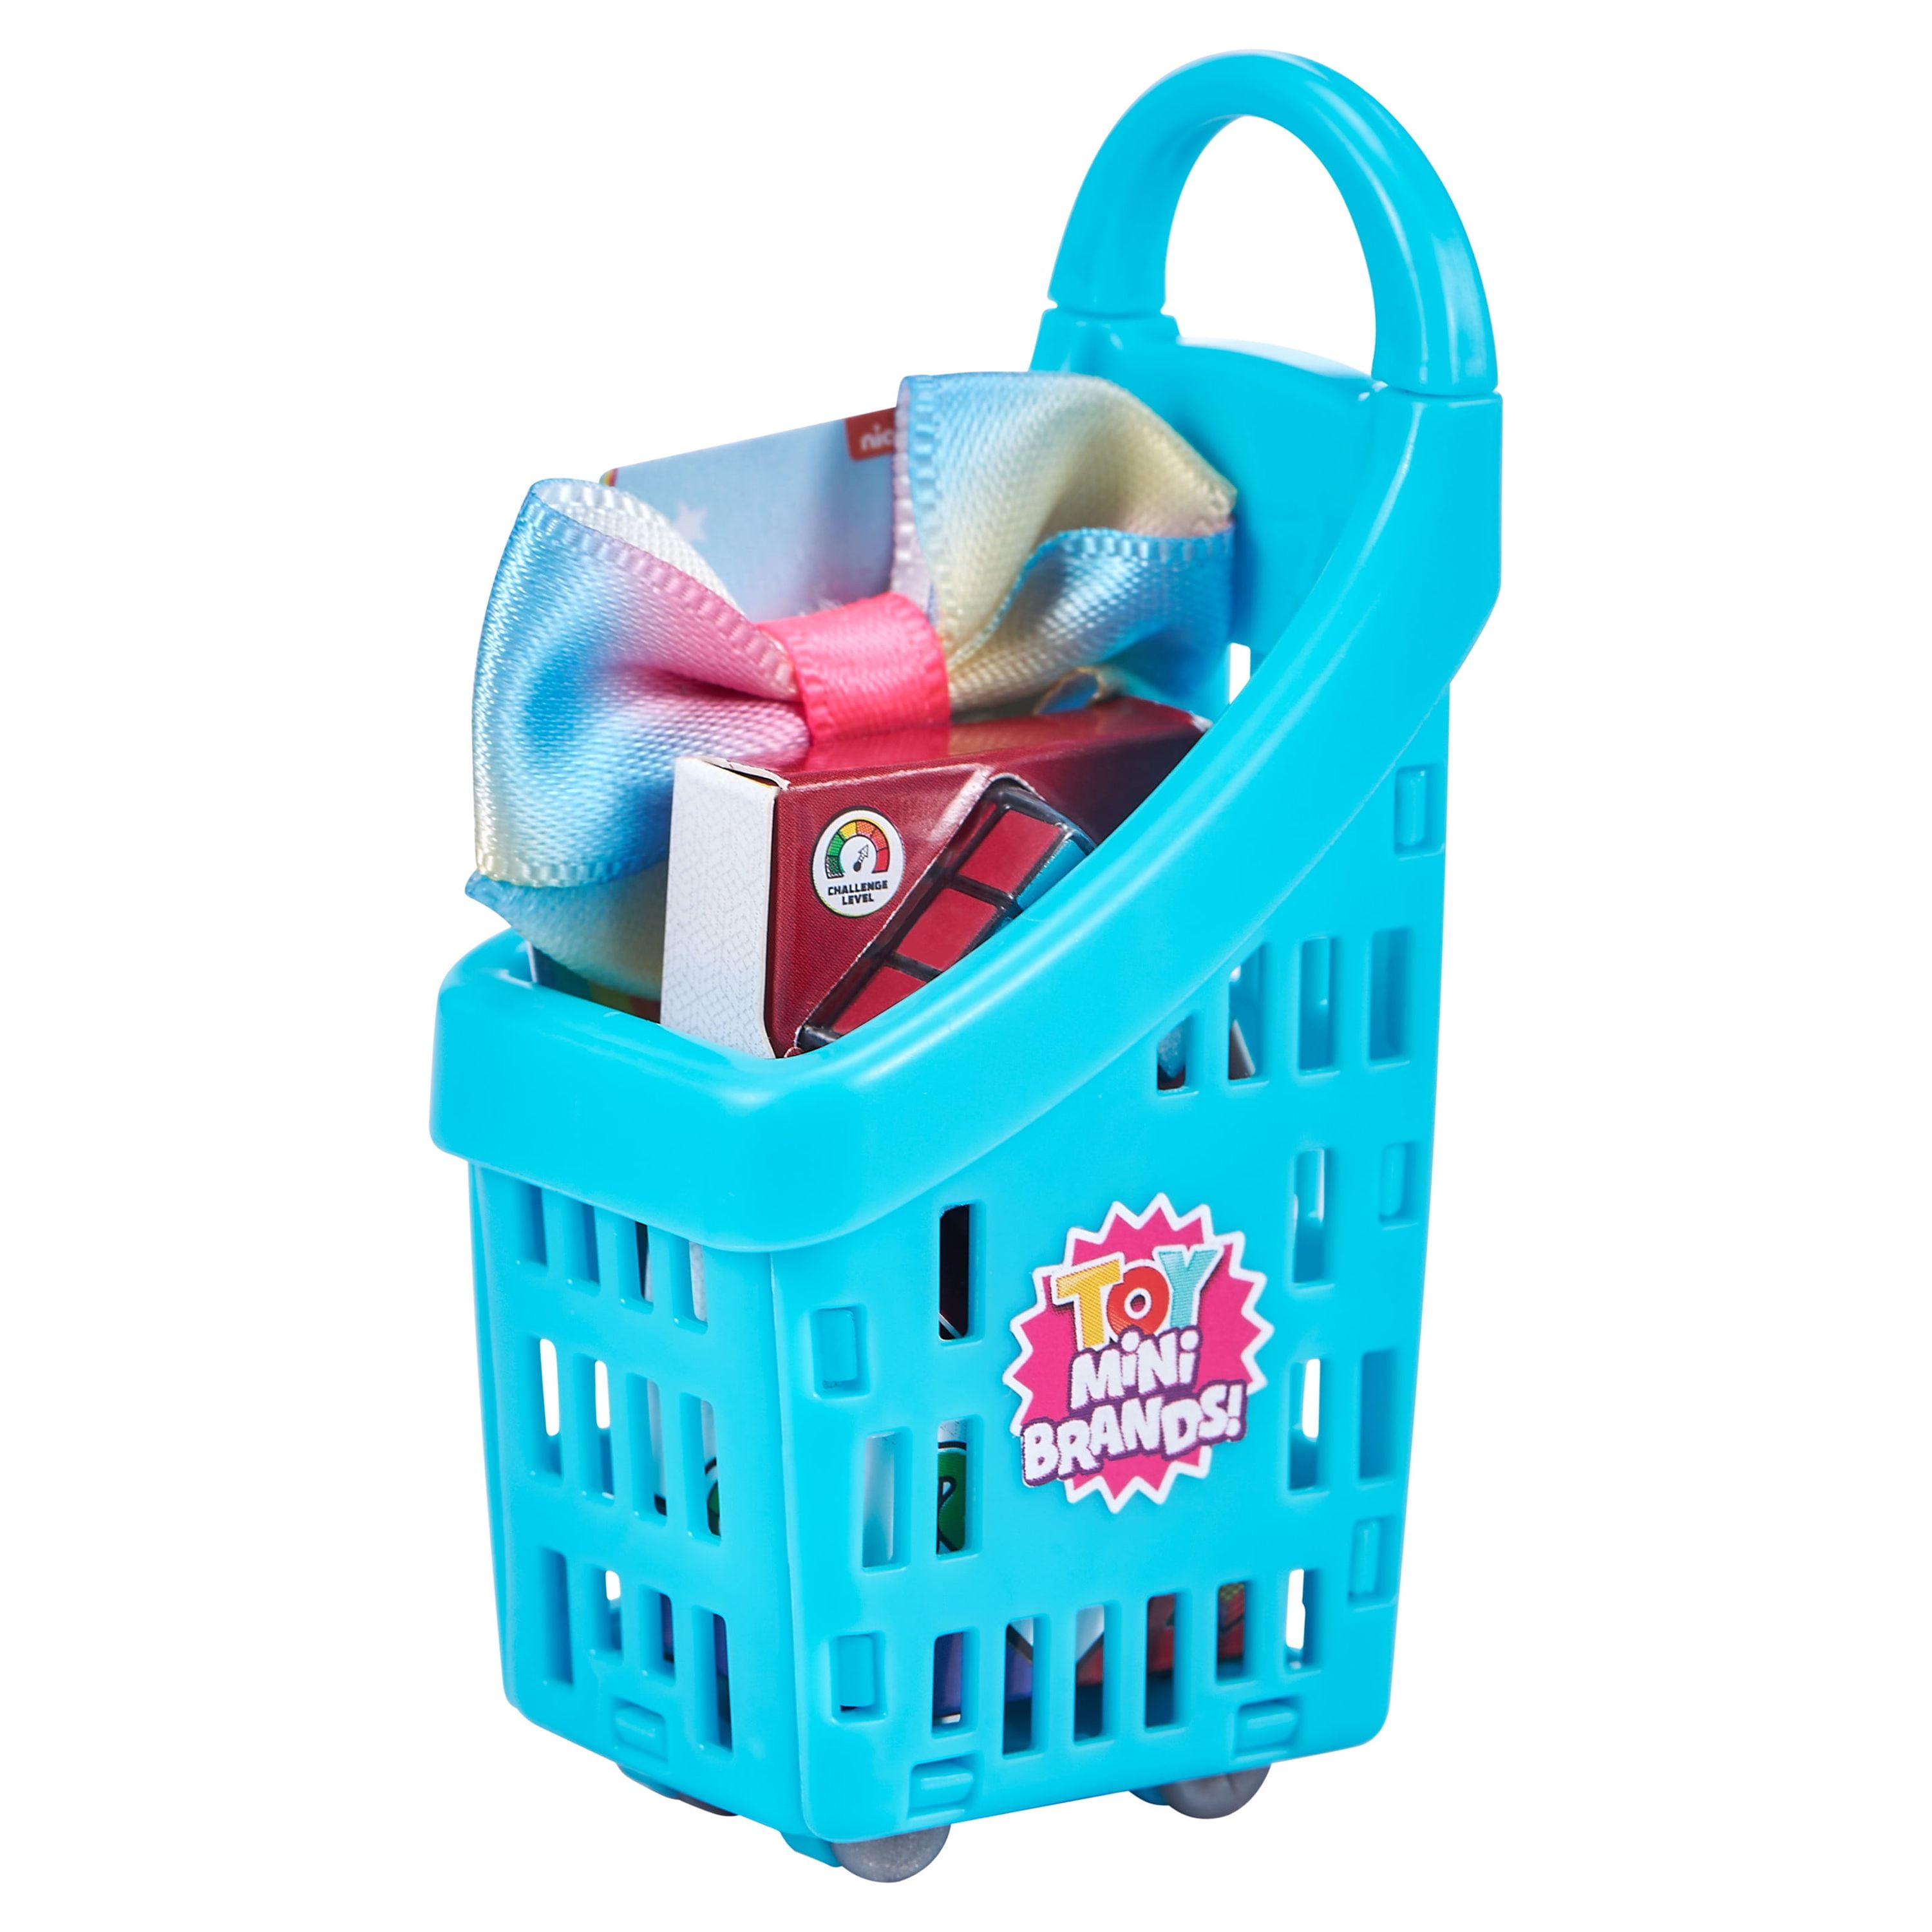 Zuru 5 Surprise Mini Brands Toy, 1 ct - Dillons Food Stores